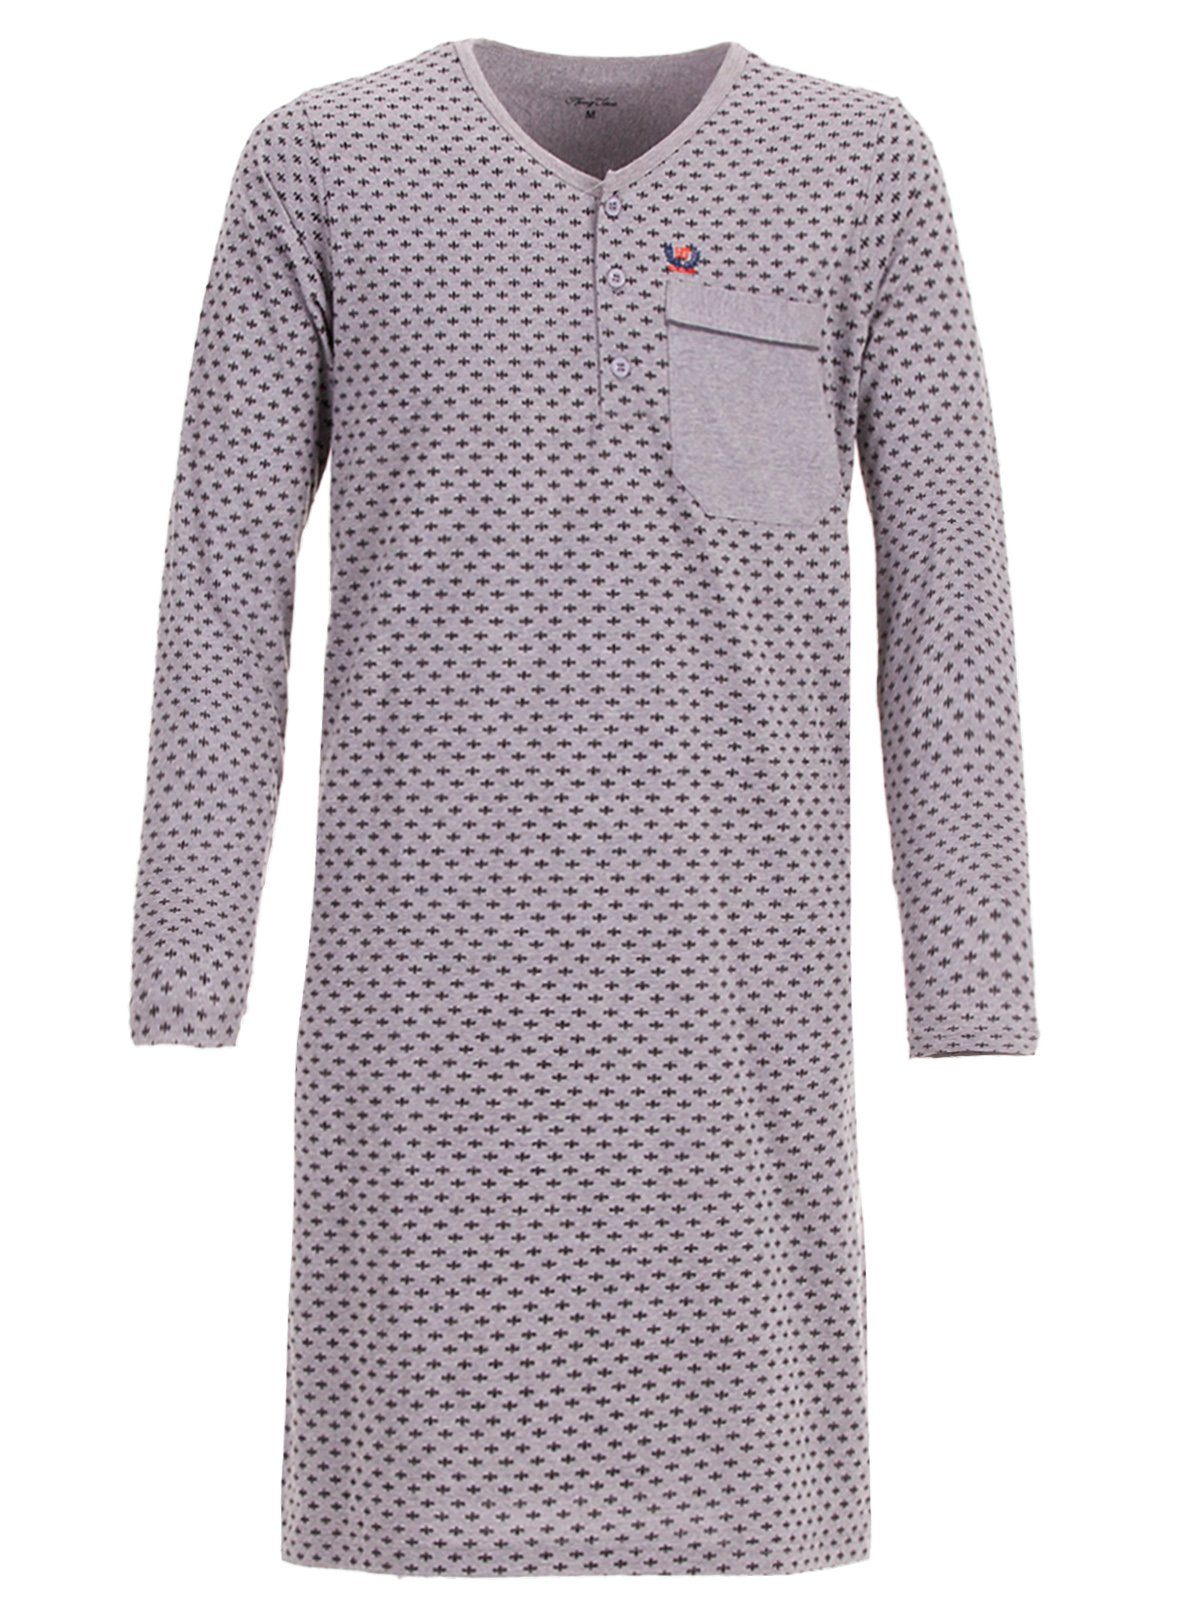 Henry Terre Nachthemd Nachthemd Langarm- Lilie grau